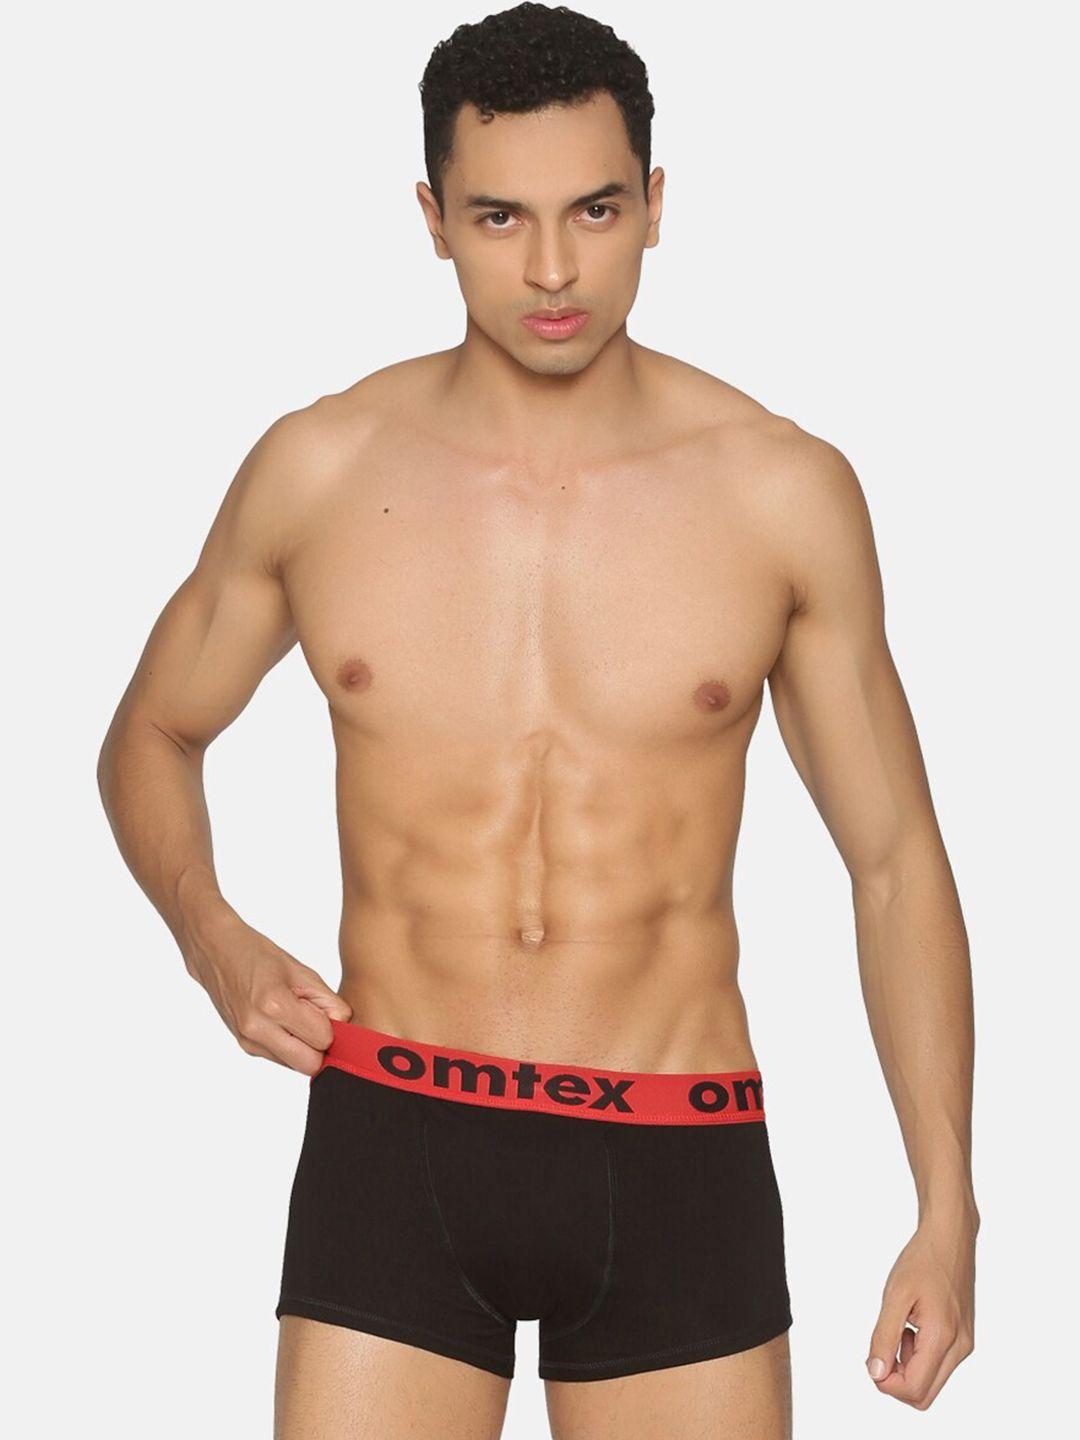 omtex men mid -rise cotton boy shorts briefs